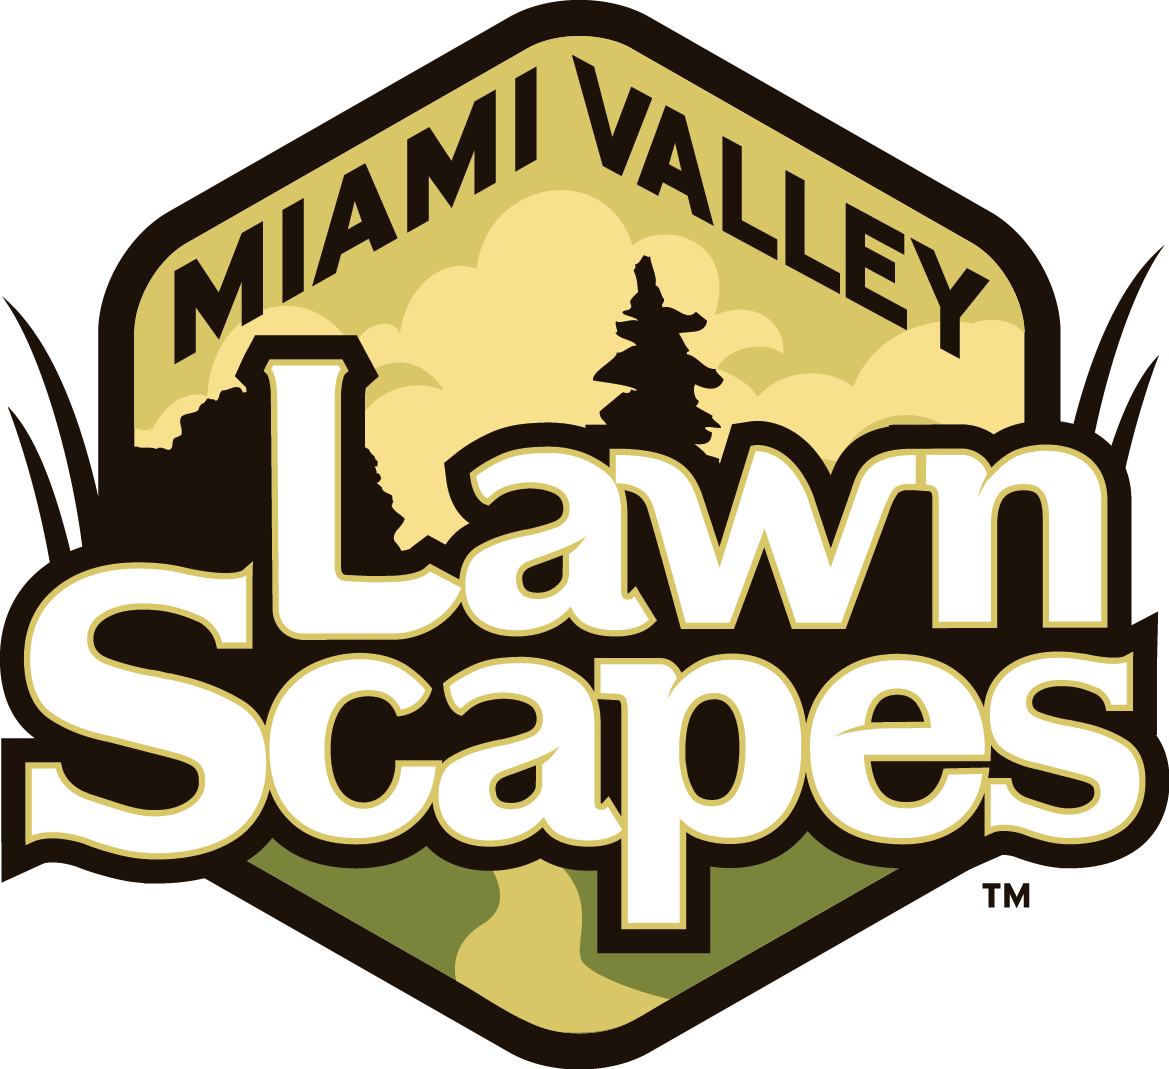 Miami Valley LawnScapes Logo